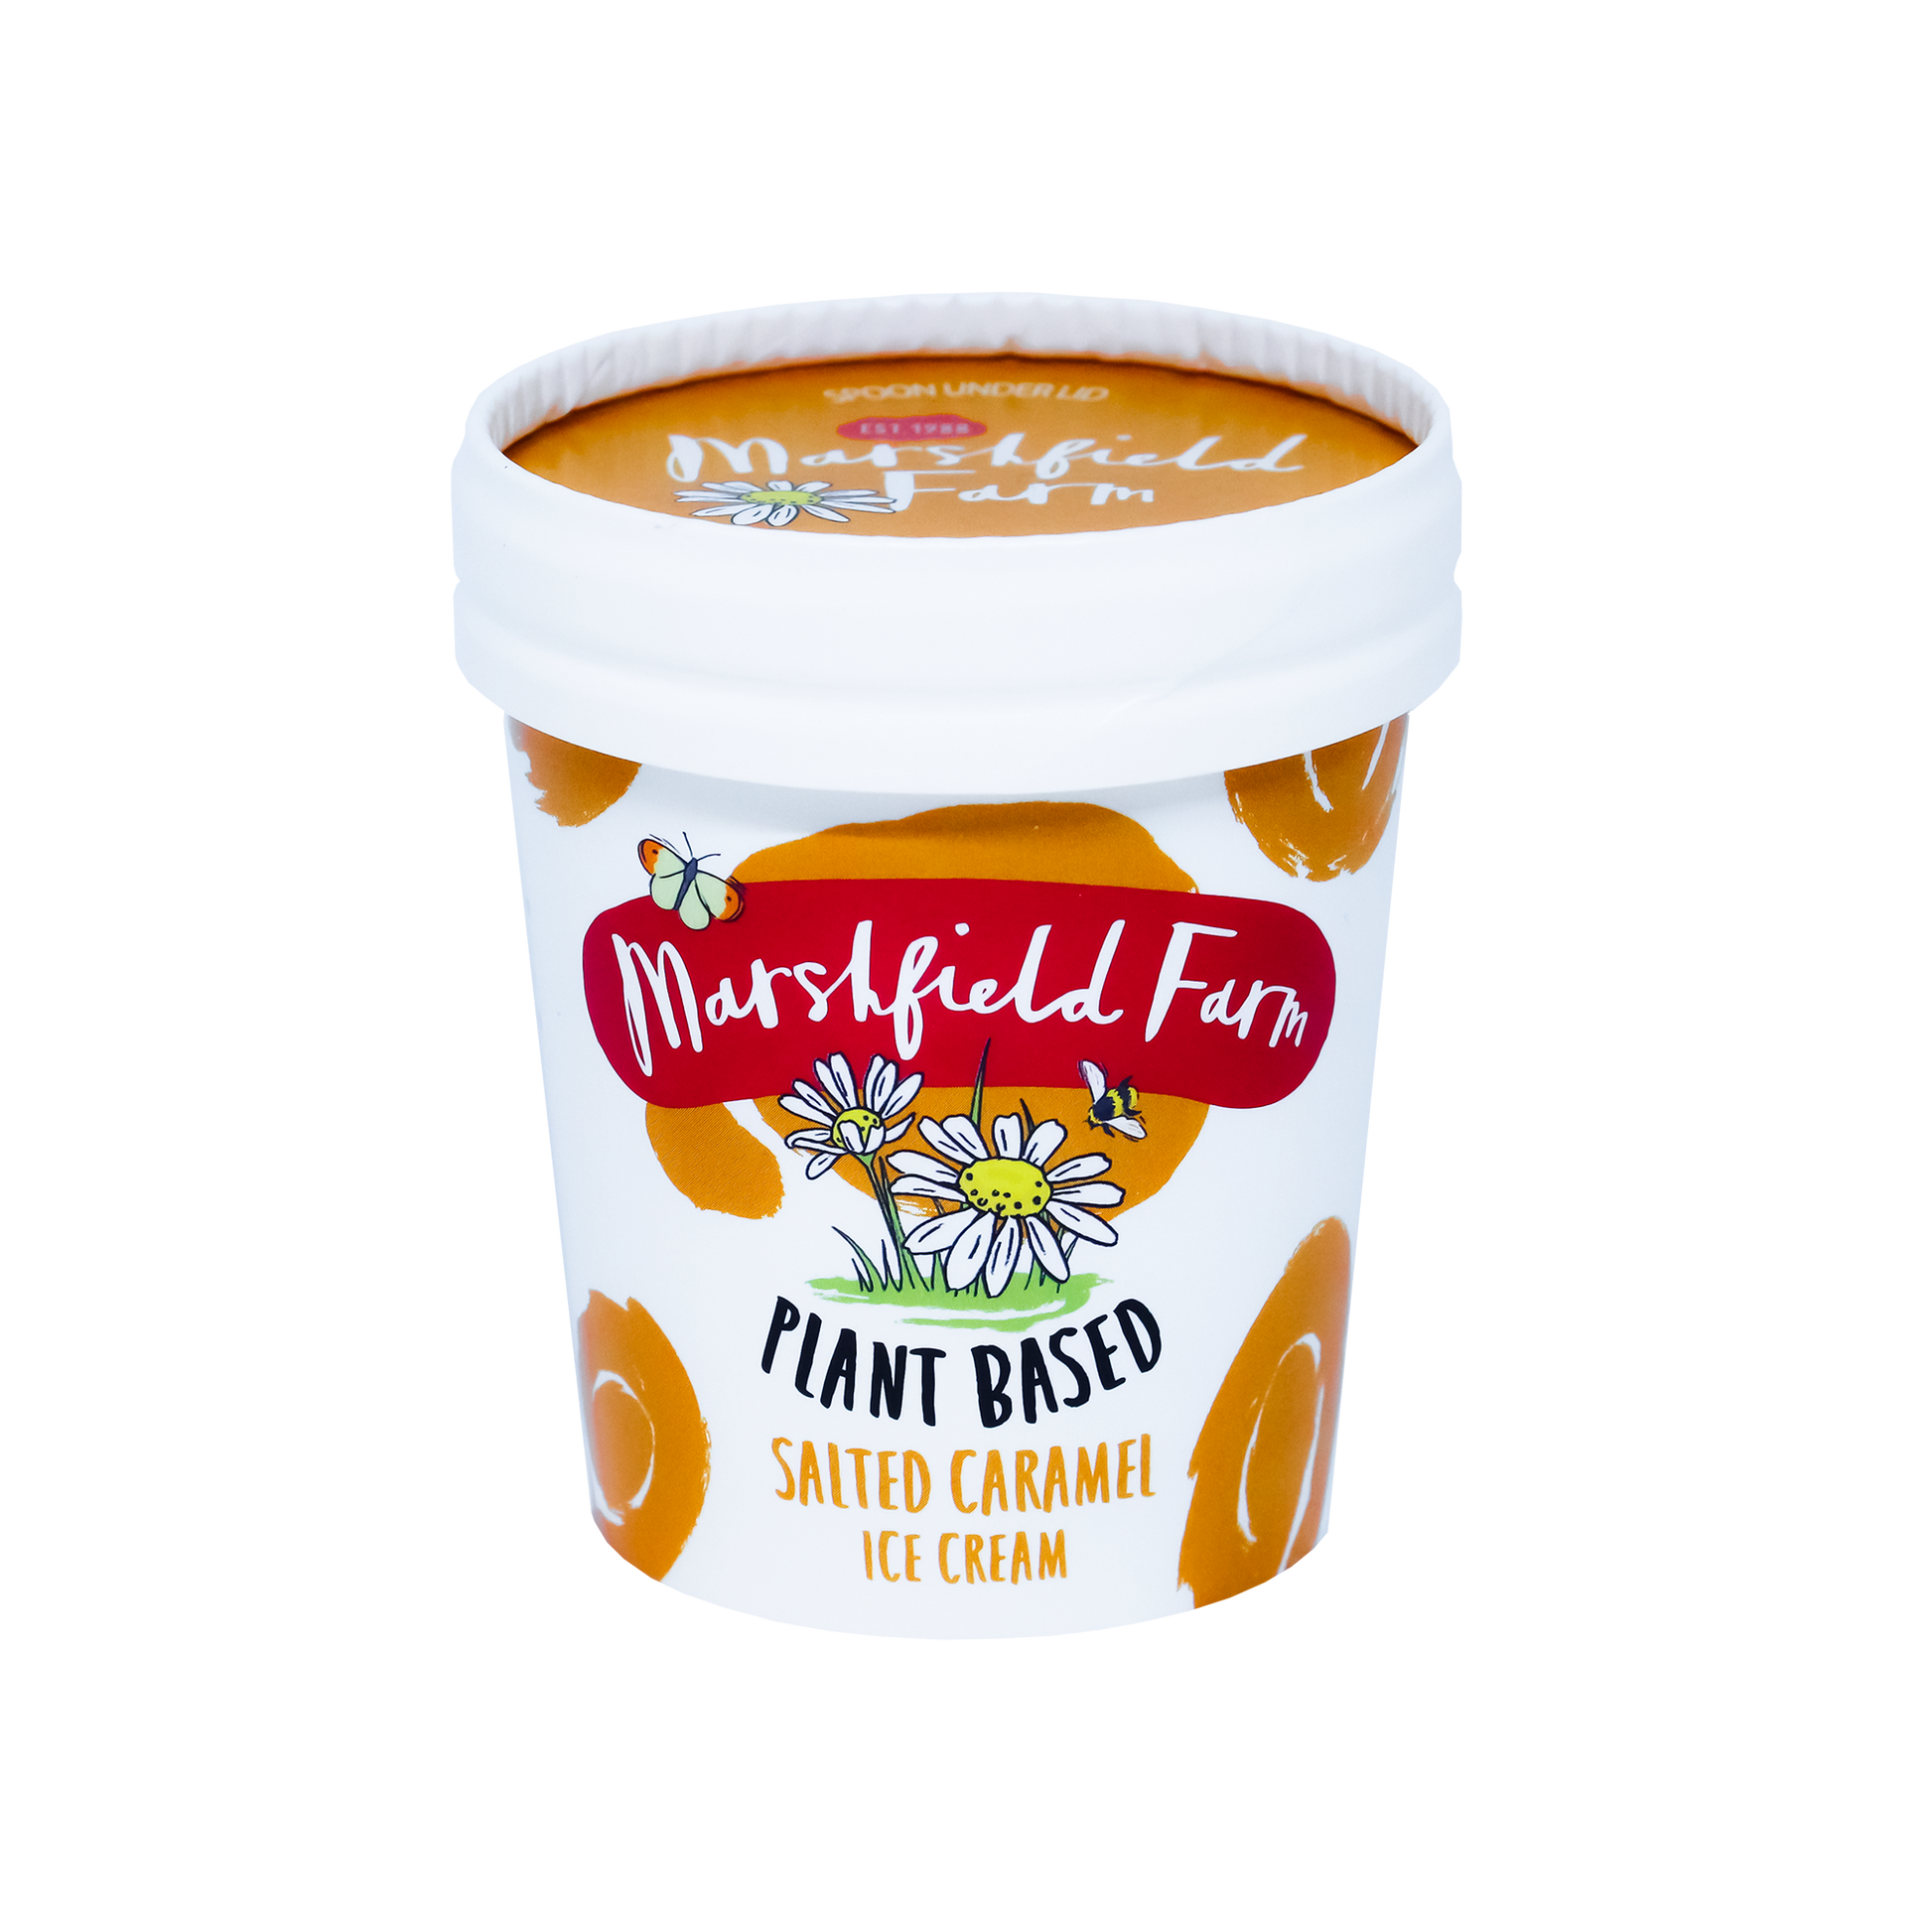 Marshfield Farm Plant Based Salted Caramel Ice Cream 125ml Tub